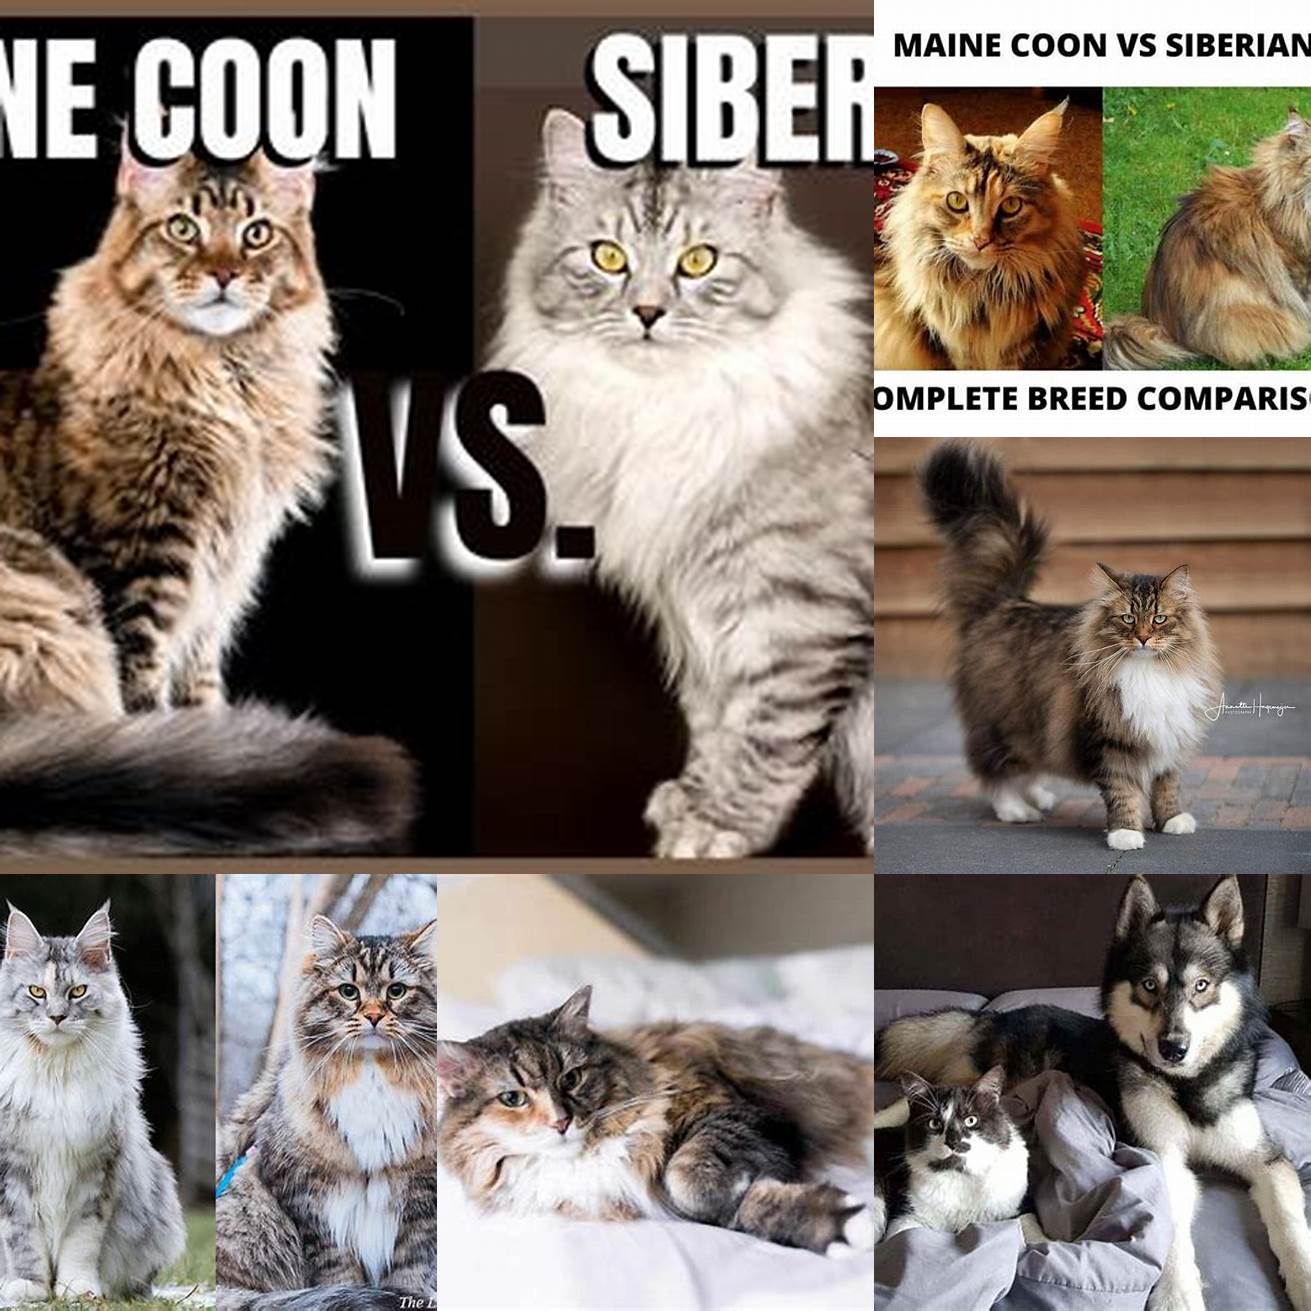 Maine Coon cat and Siberian Husky cross breed